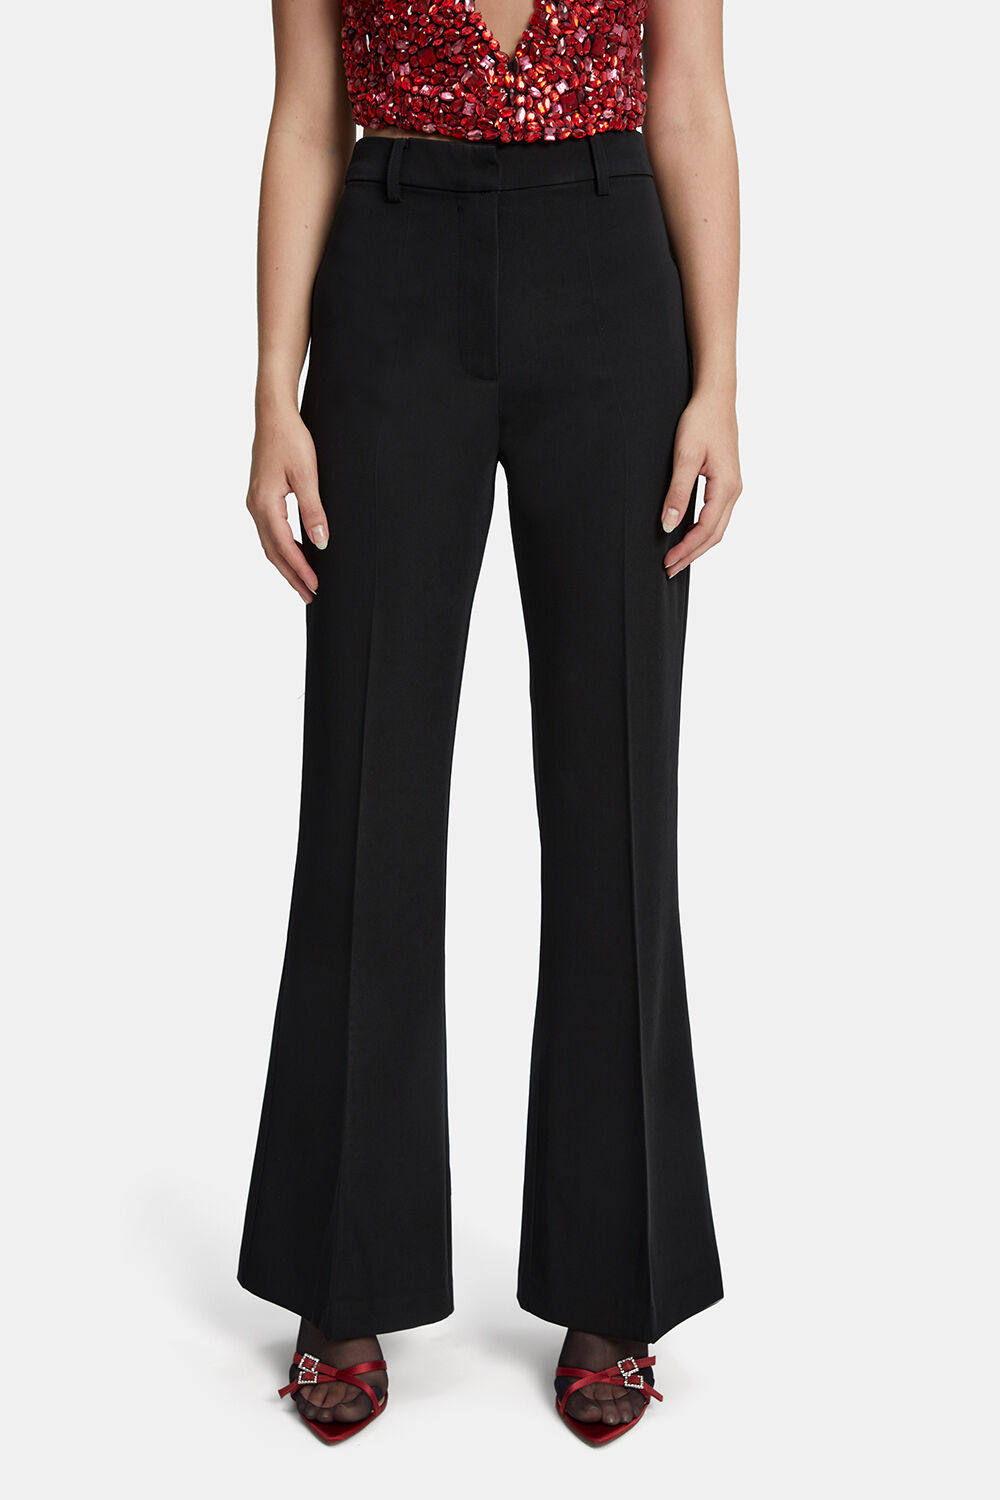 Halifax Slim Flare Pant in Black | Bardot